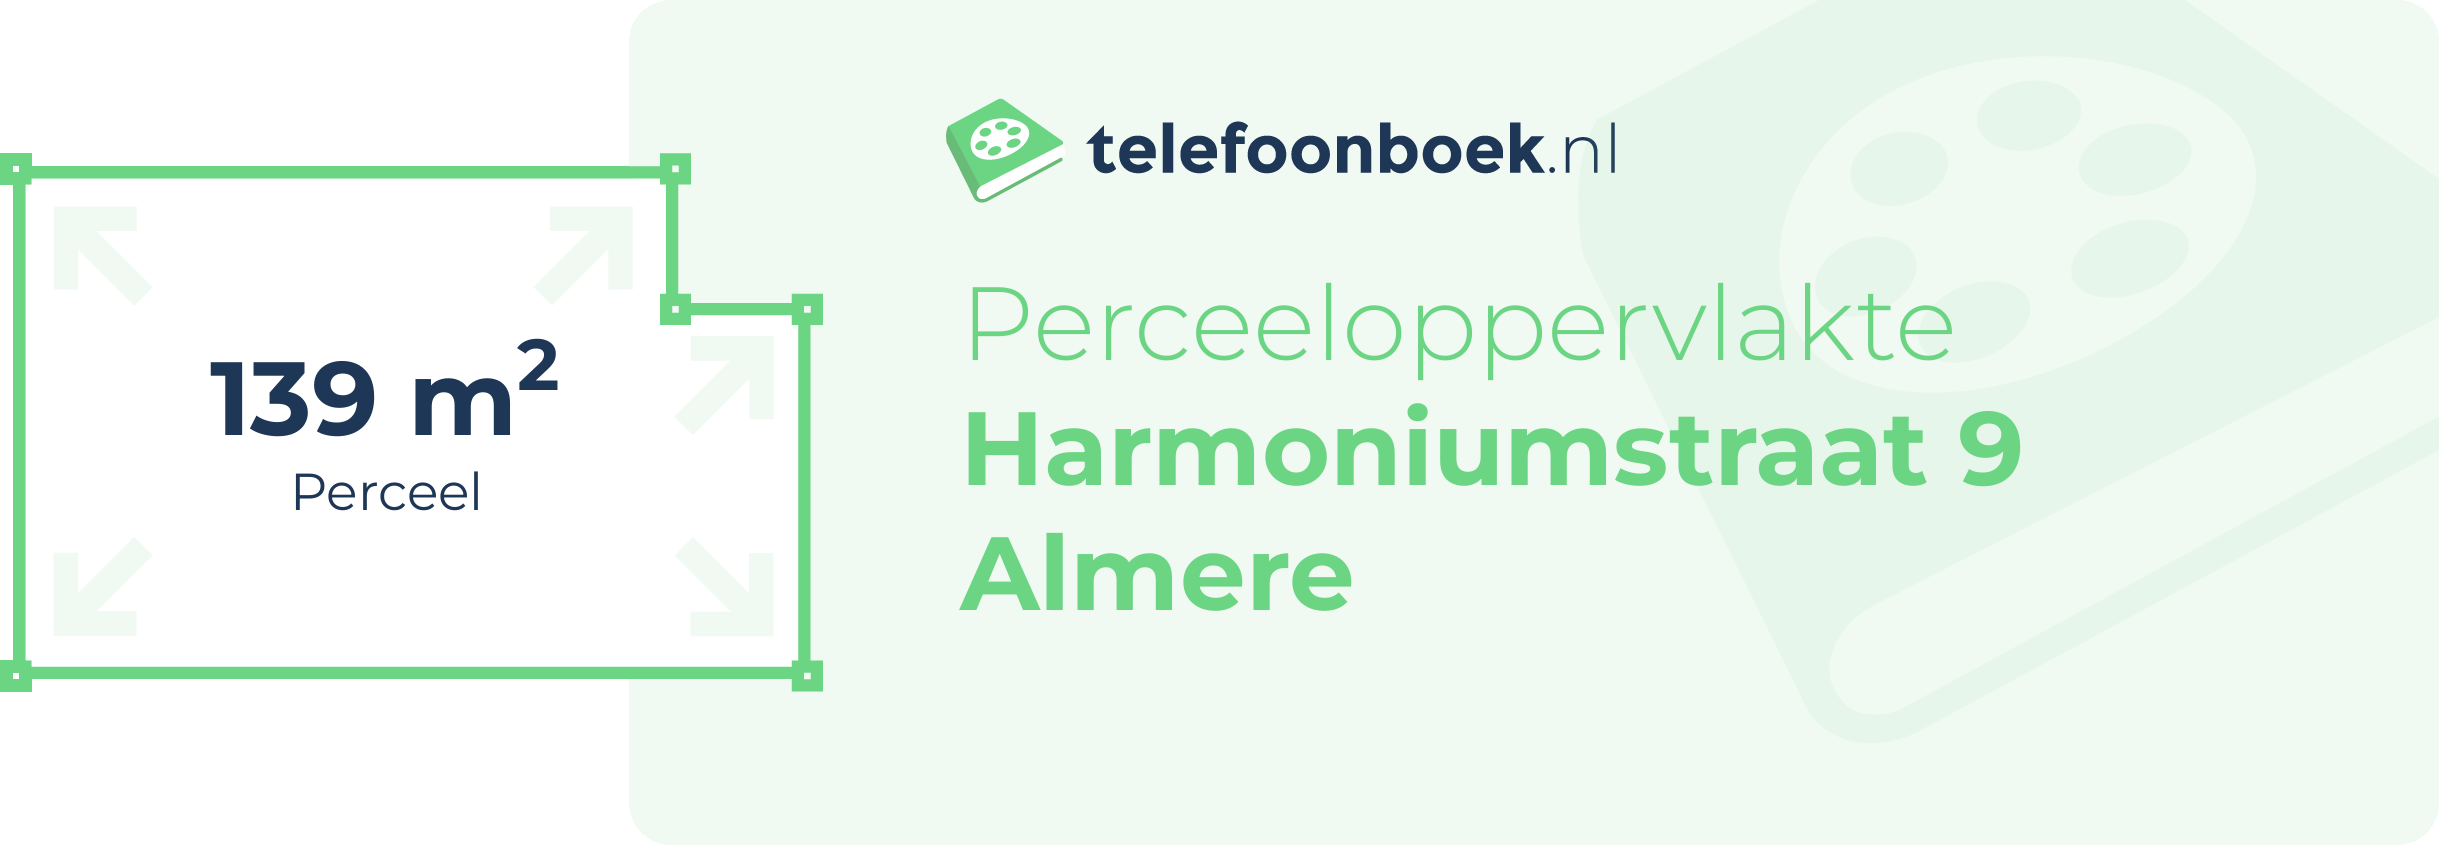 Perceeloppervlakte Harmoniumstraat 9 Almere